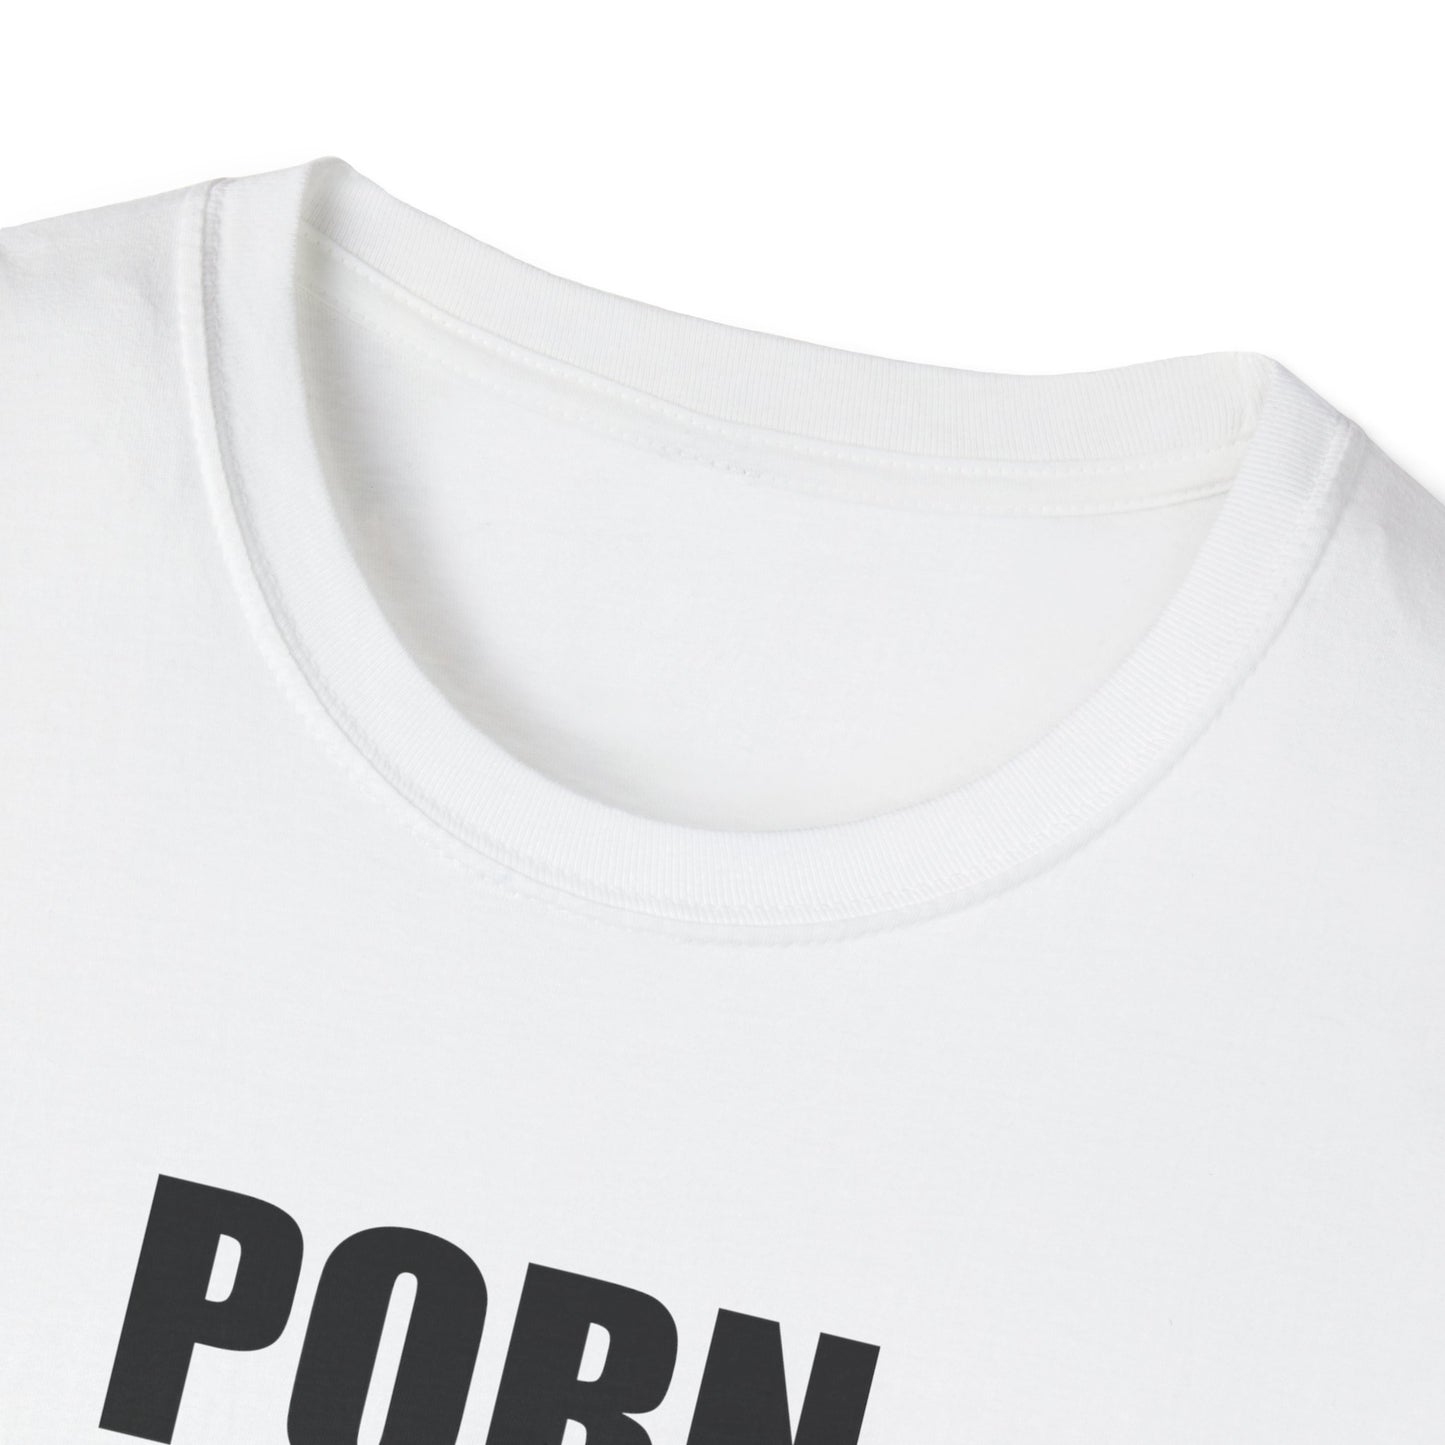 Porn Director T Shirt, Funny Humor Shirt